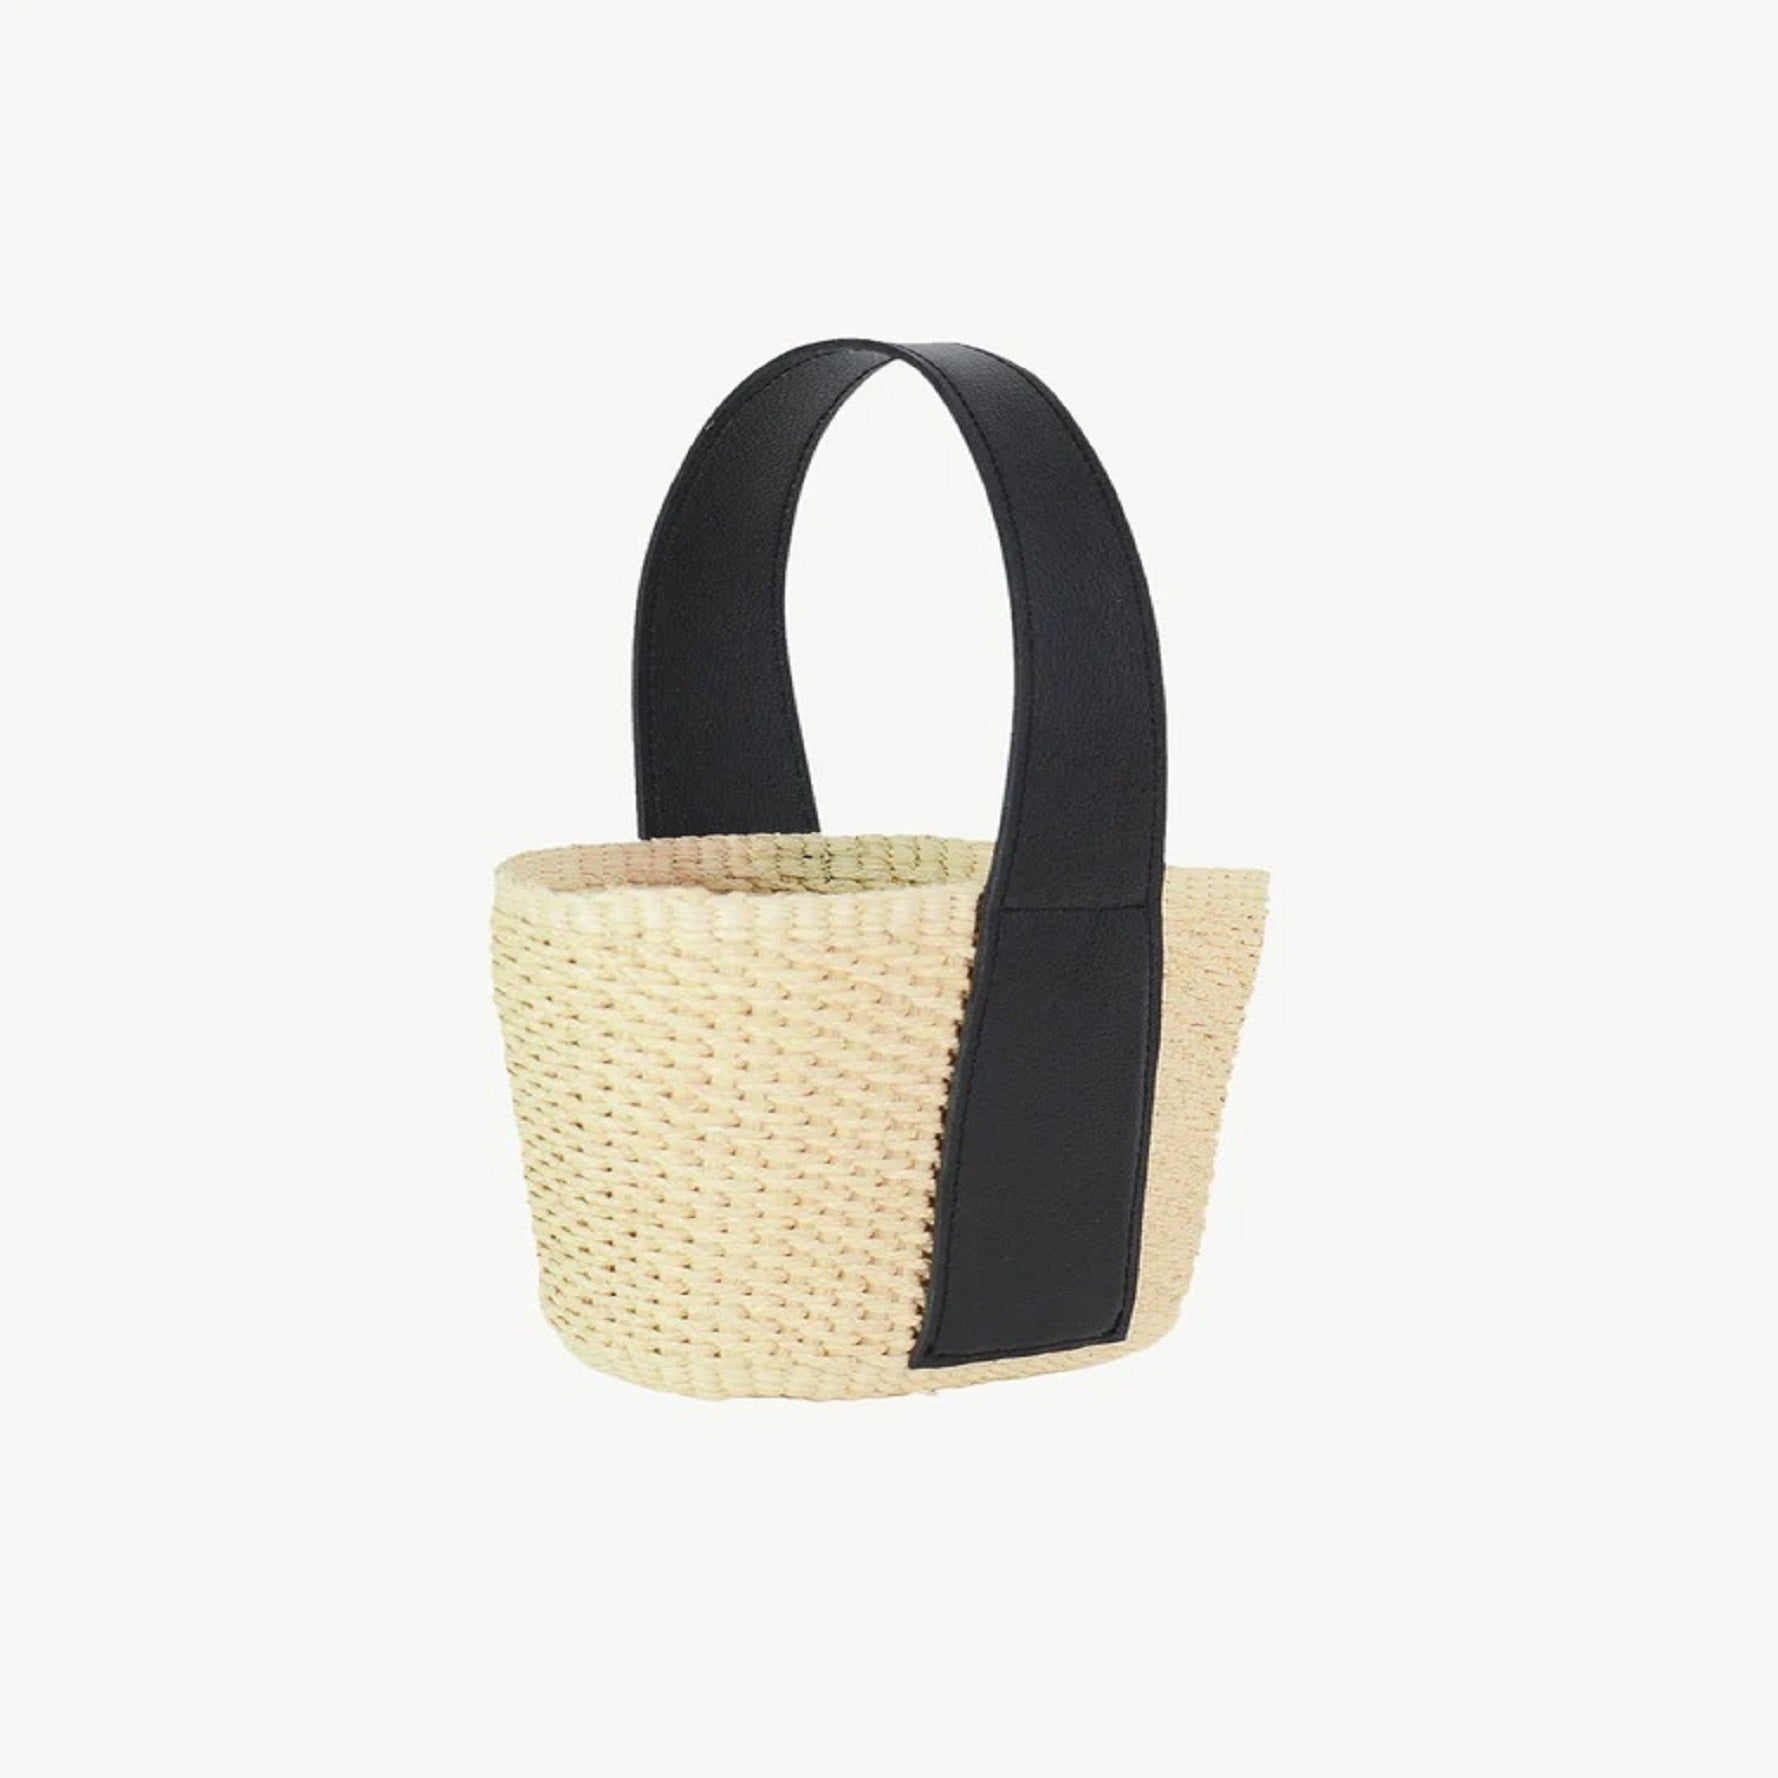 Sensi Studio - The Minimalist Handbag